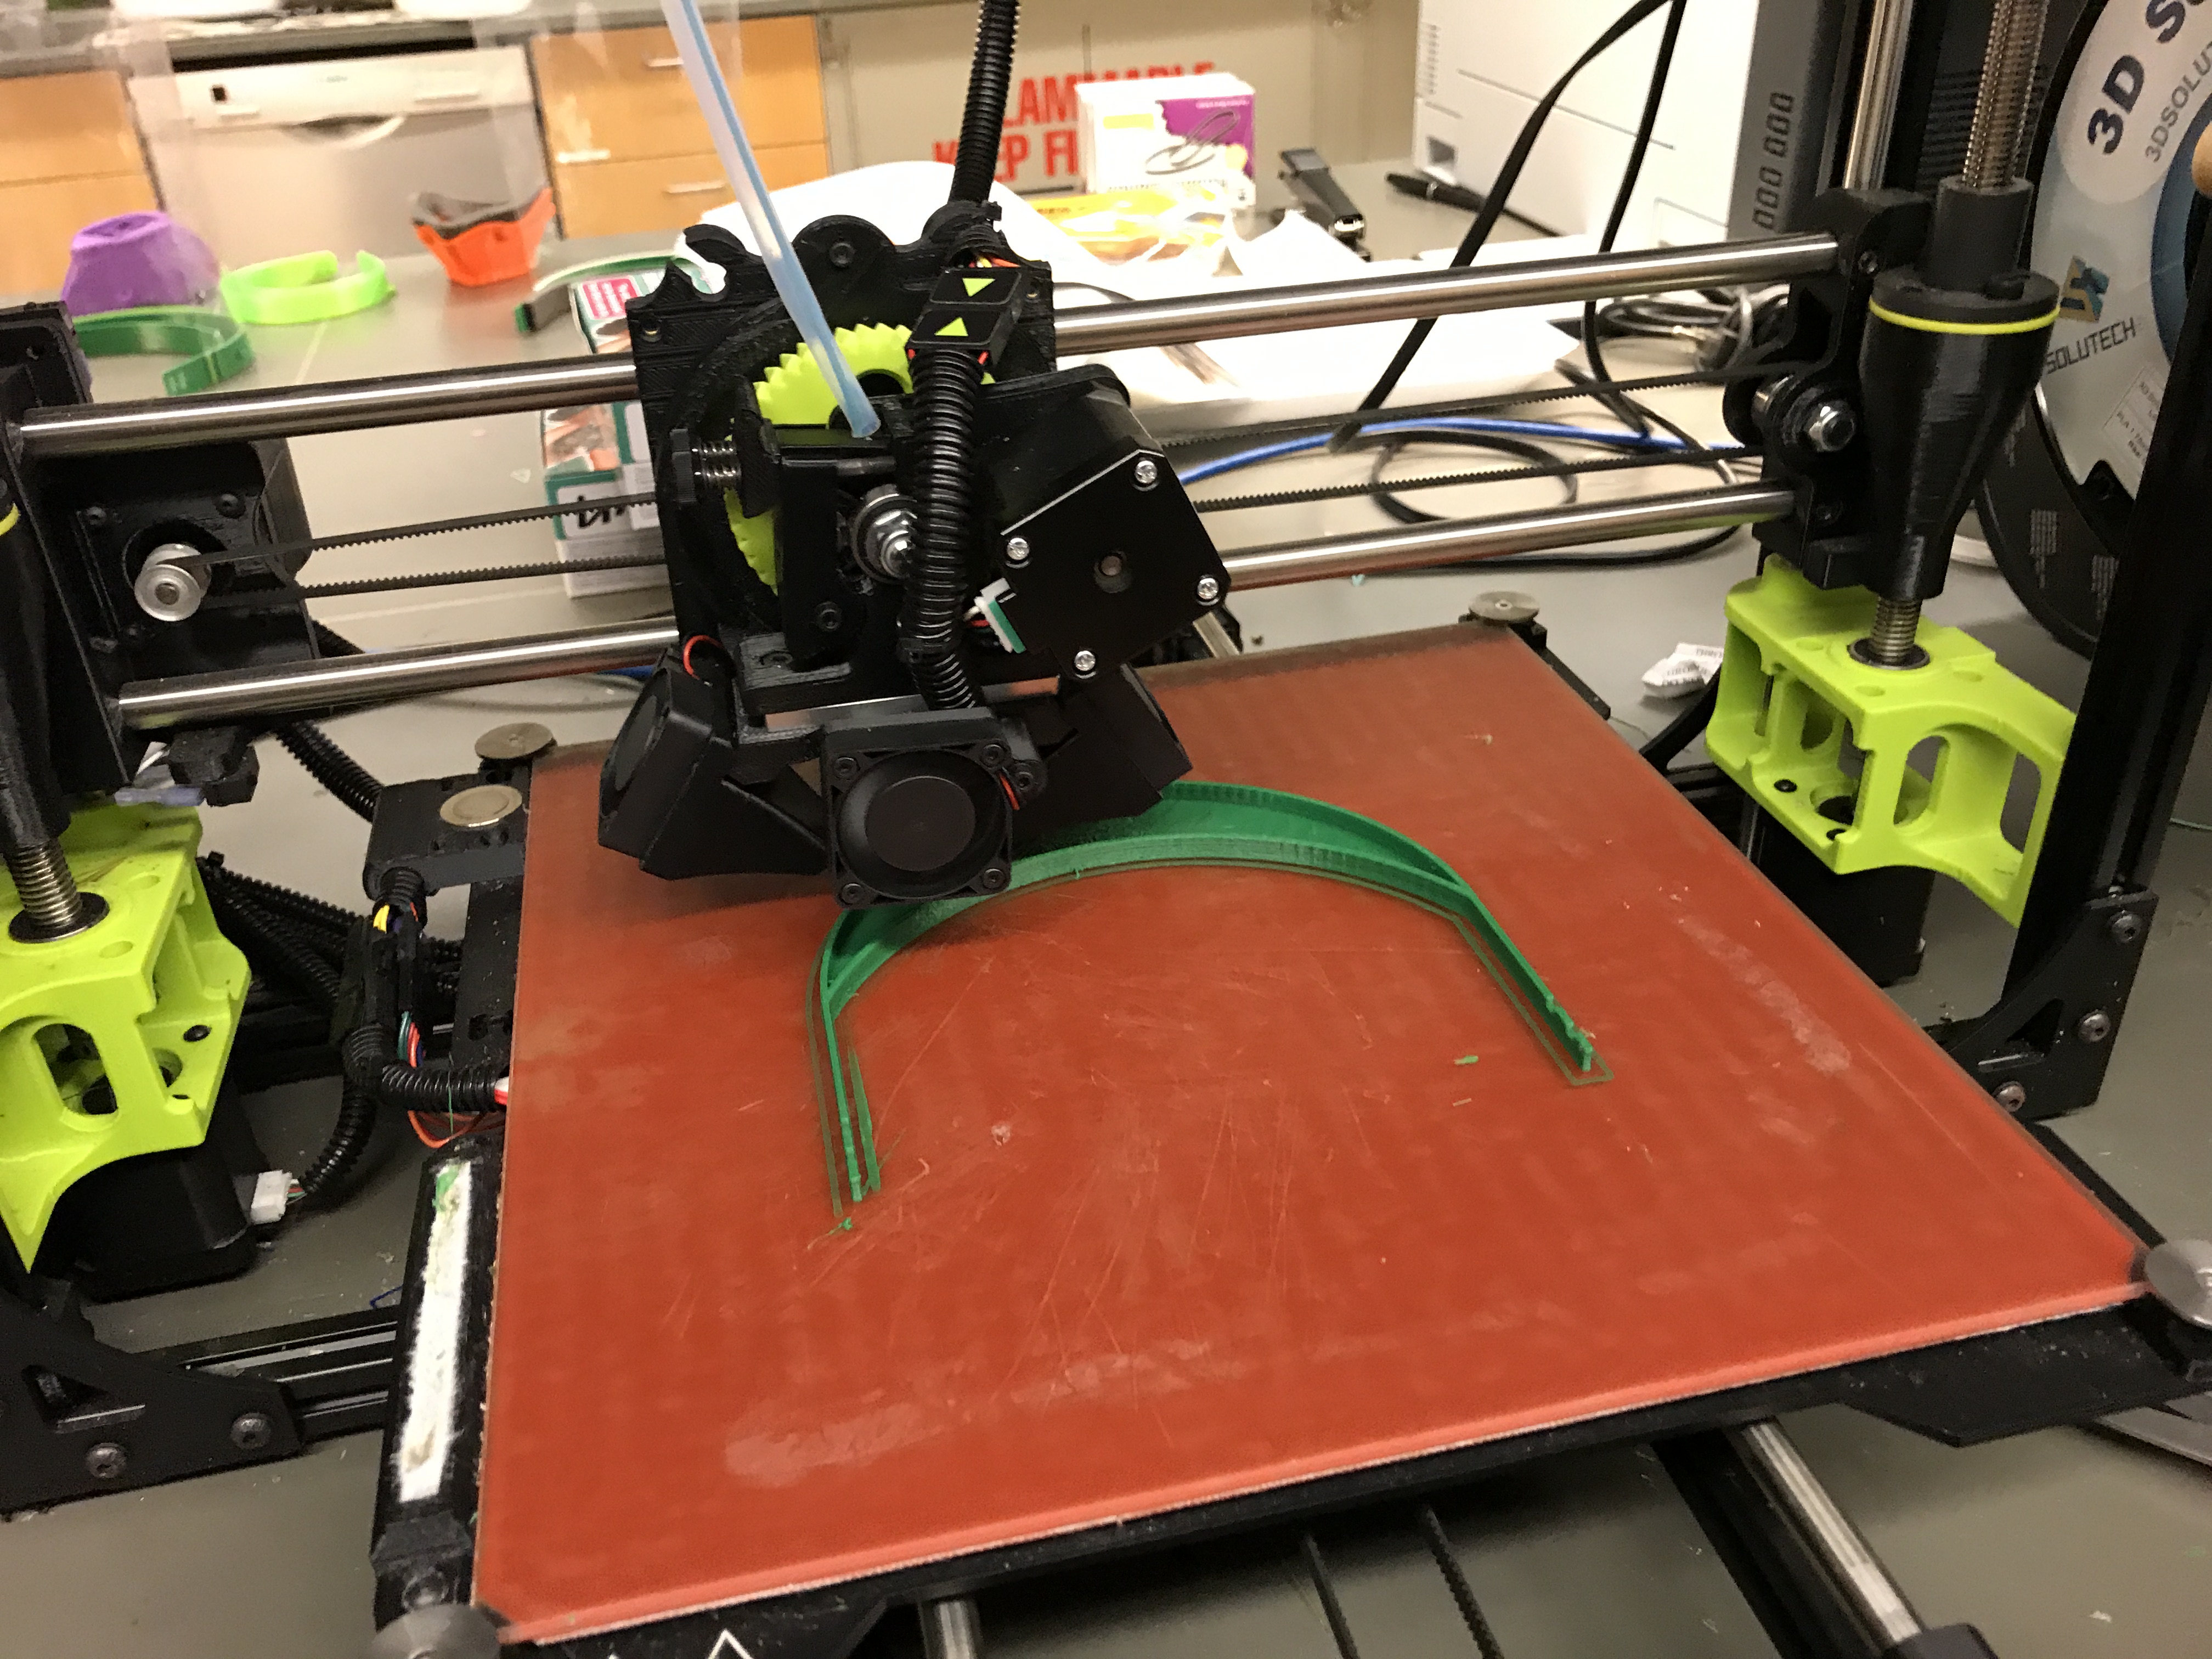 A 3D printer creating a headband.